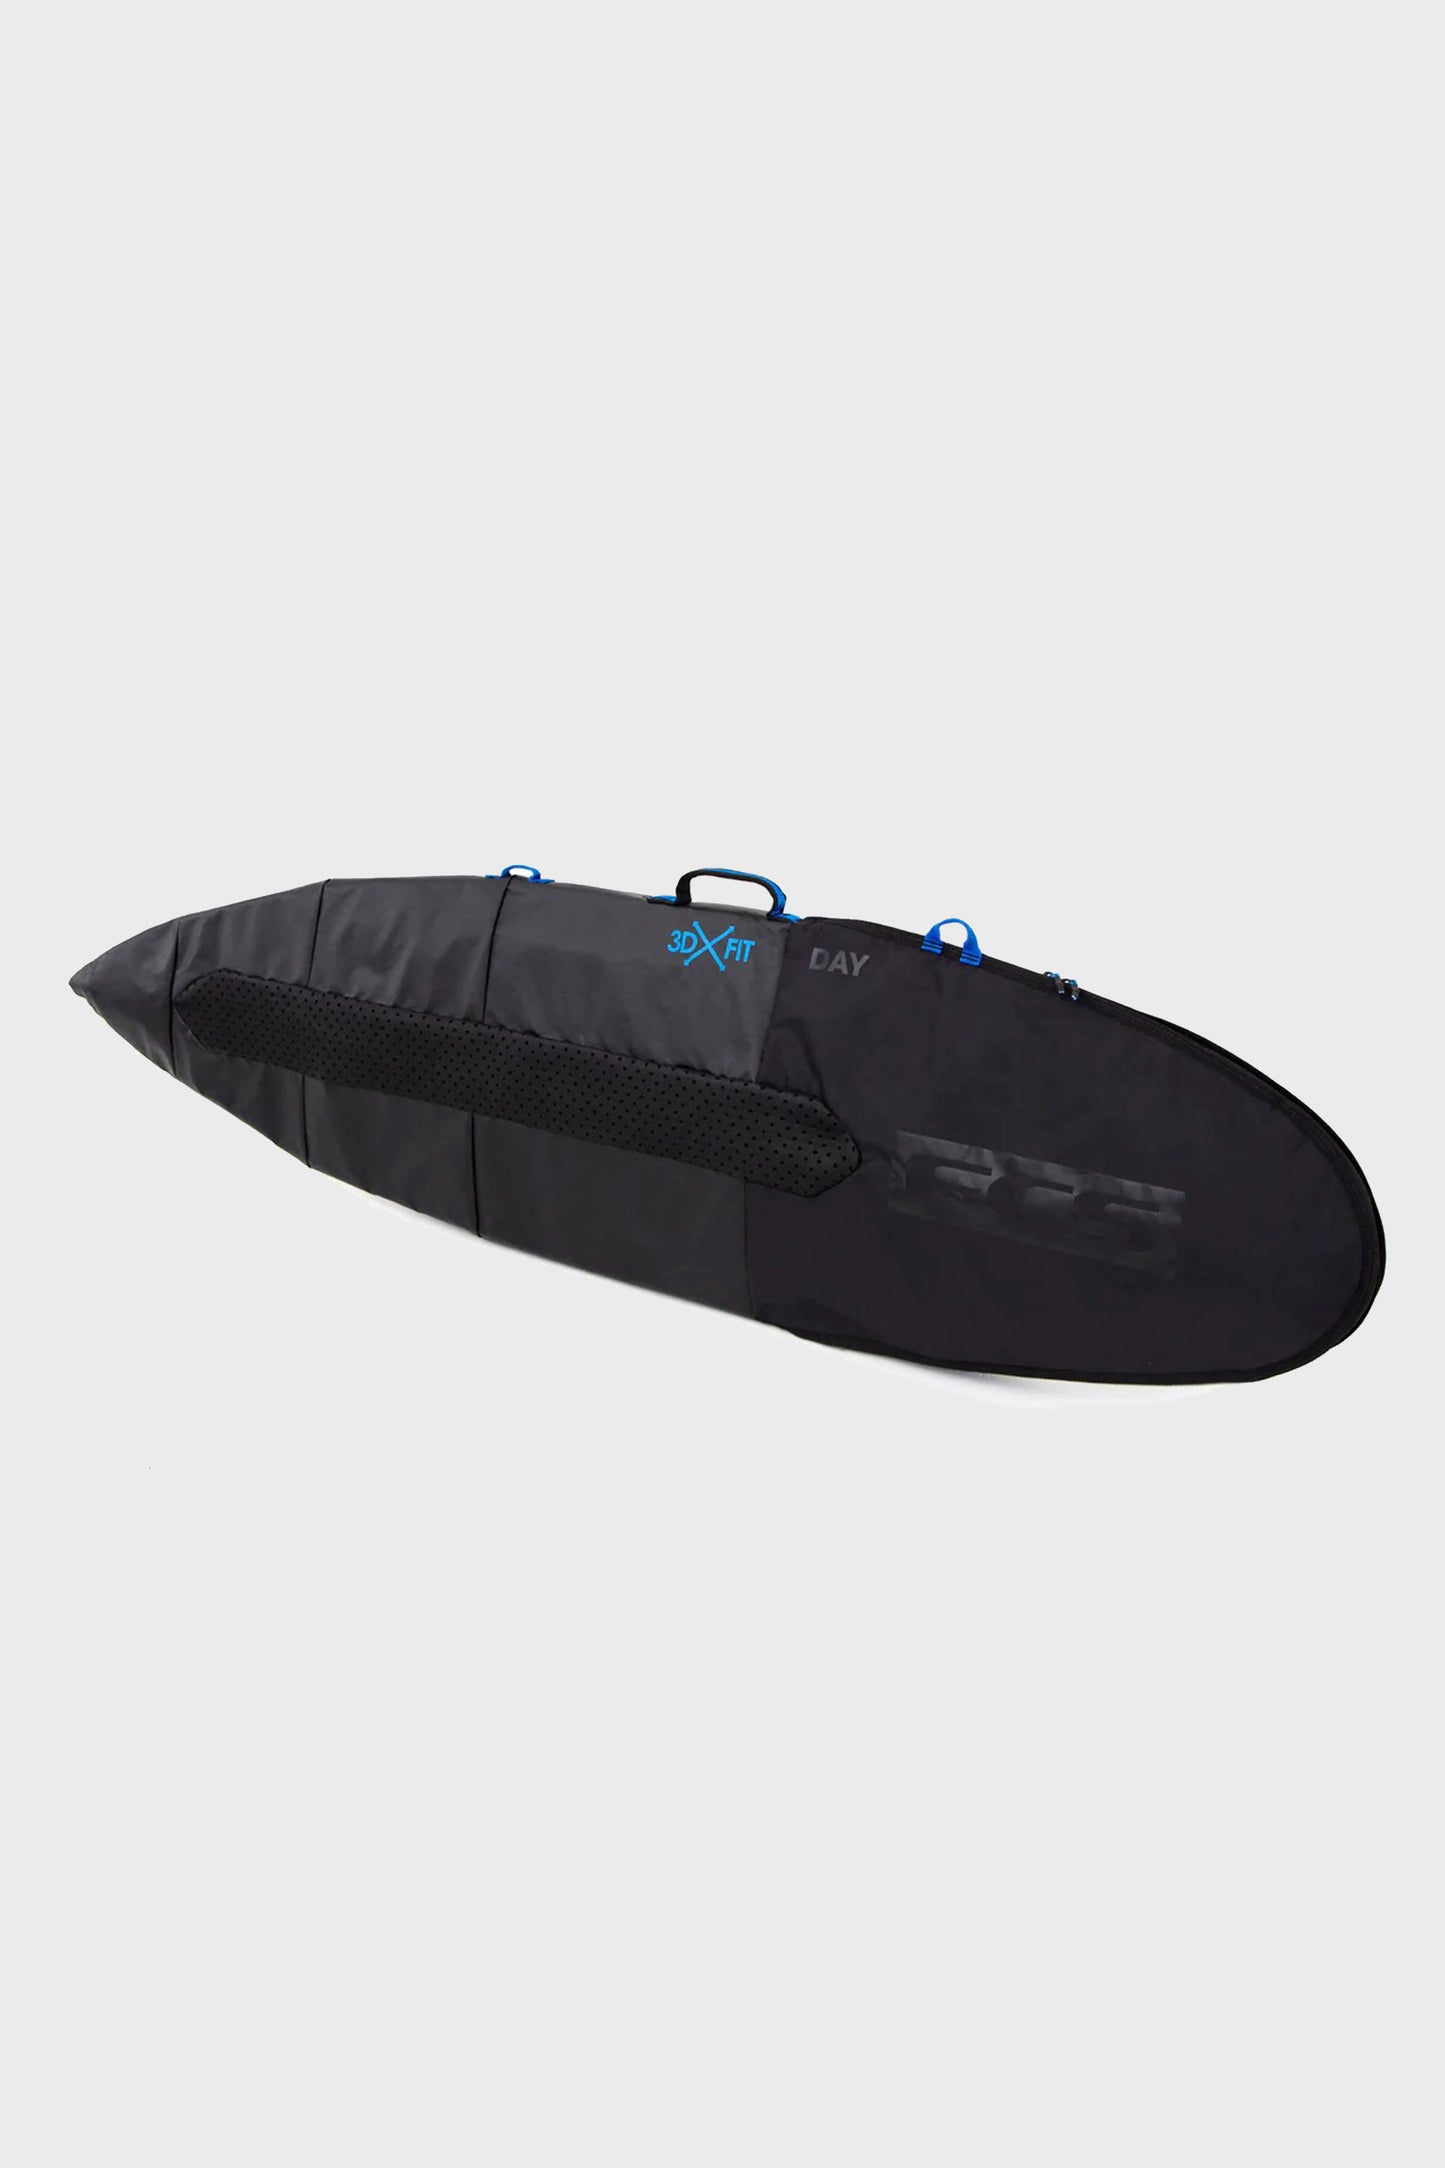 
                  
                        Pukas-Surf-Shop-FCS-boardbags-Day-All-Purpose-6.7-black
                  
                